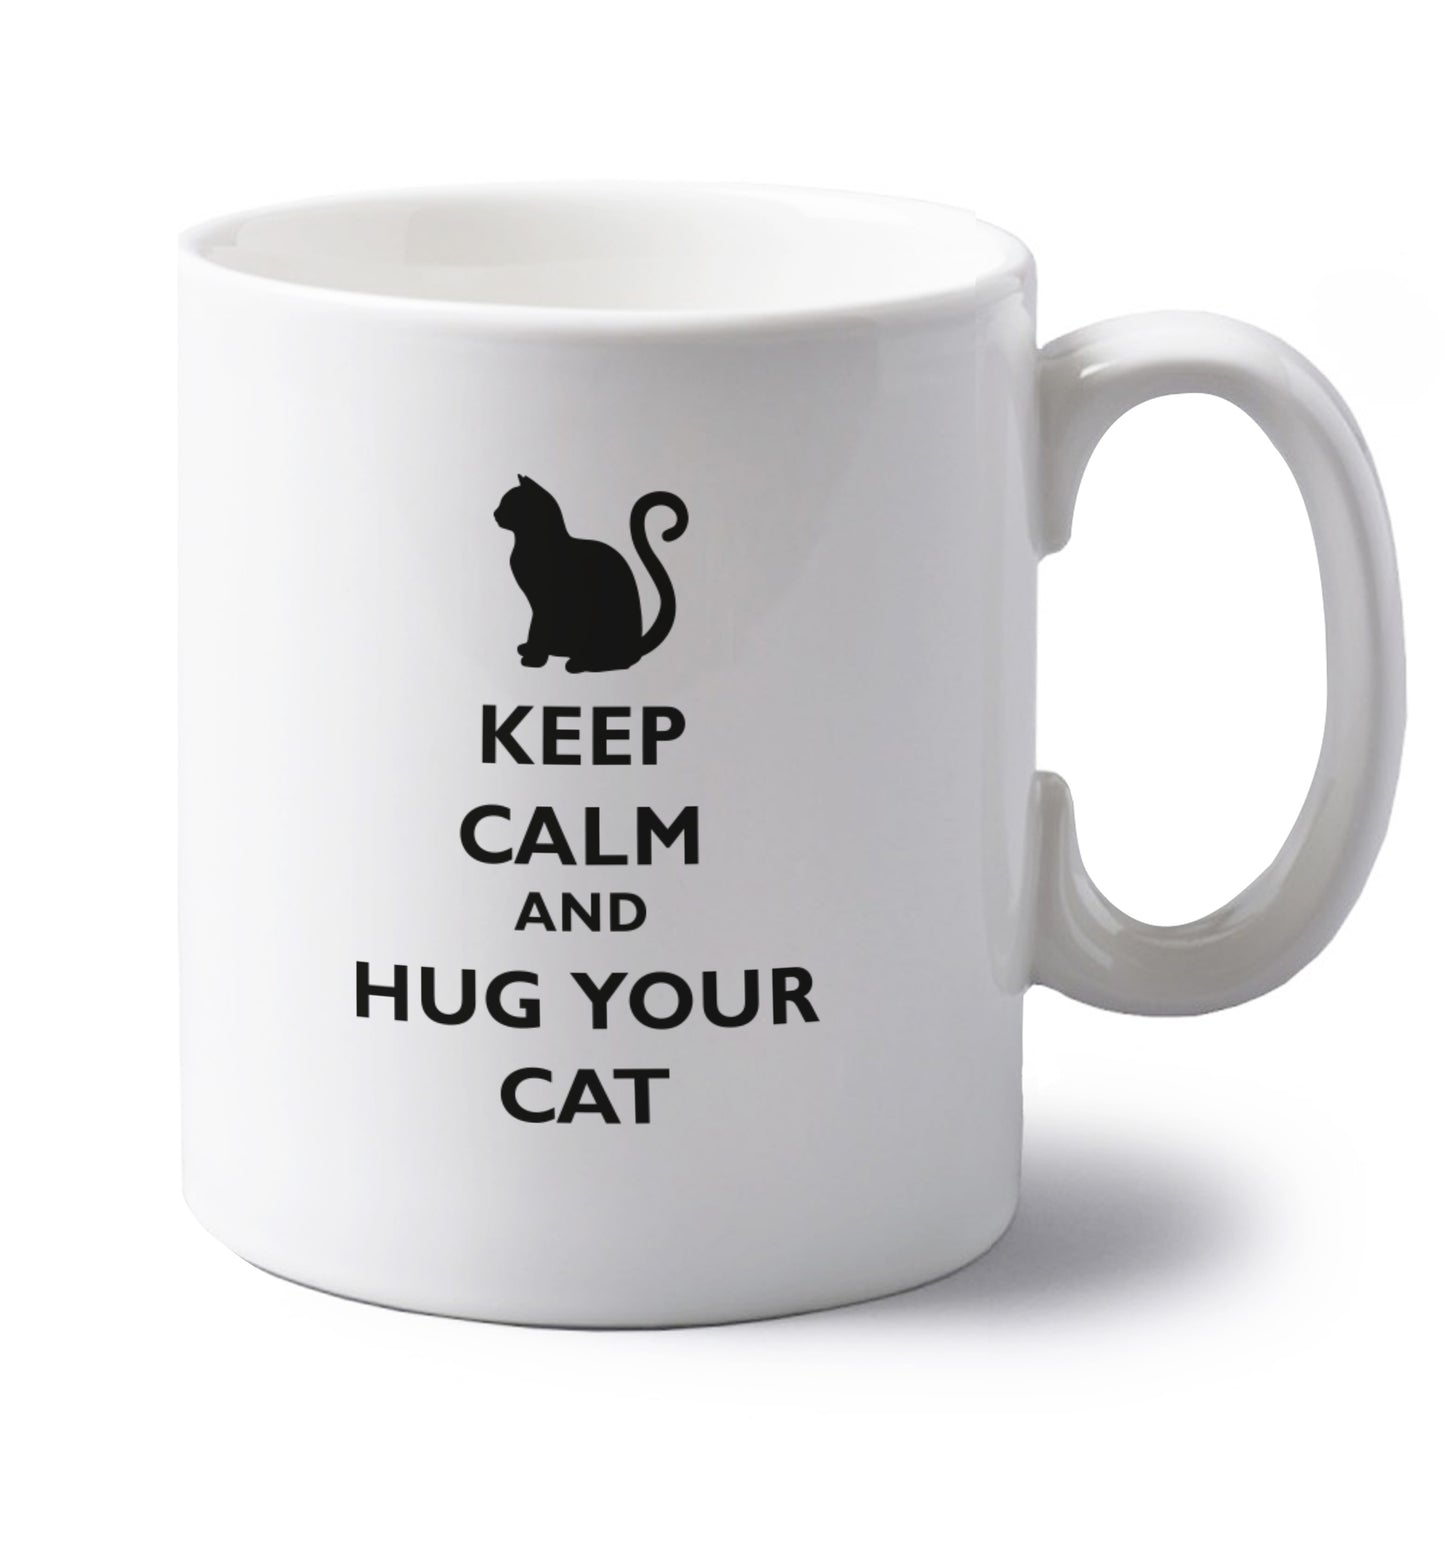 Keep calm and hug your cat left handed white ceramic mug 